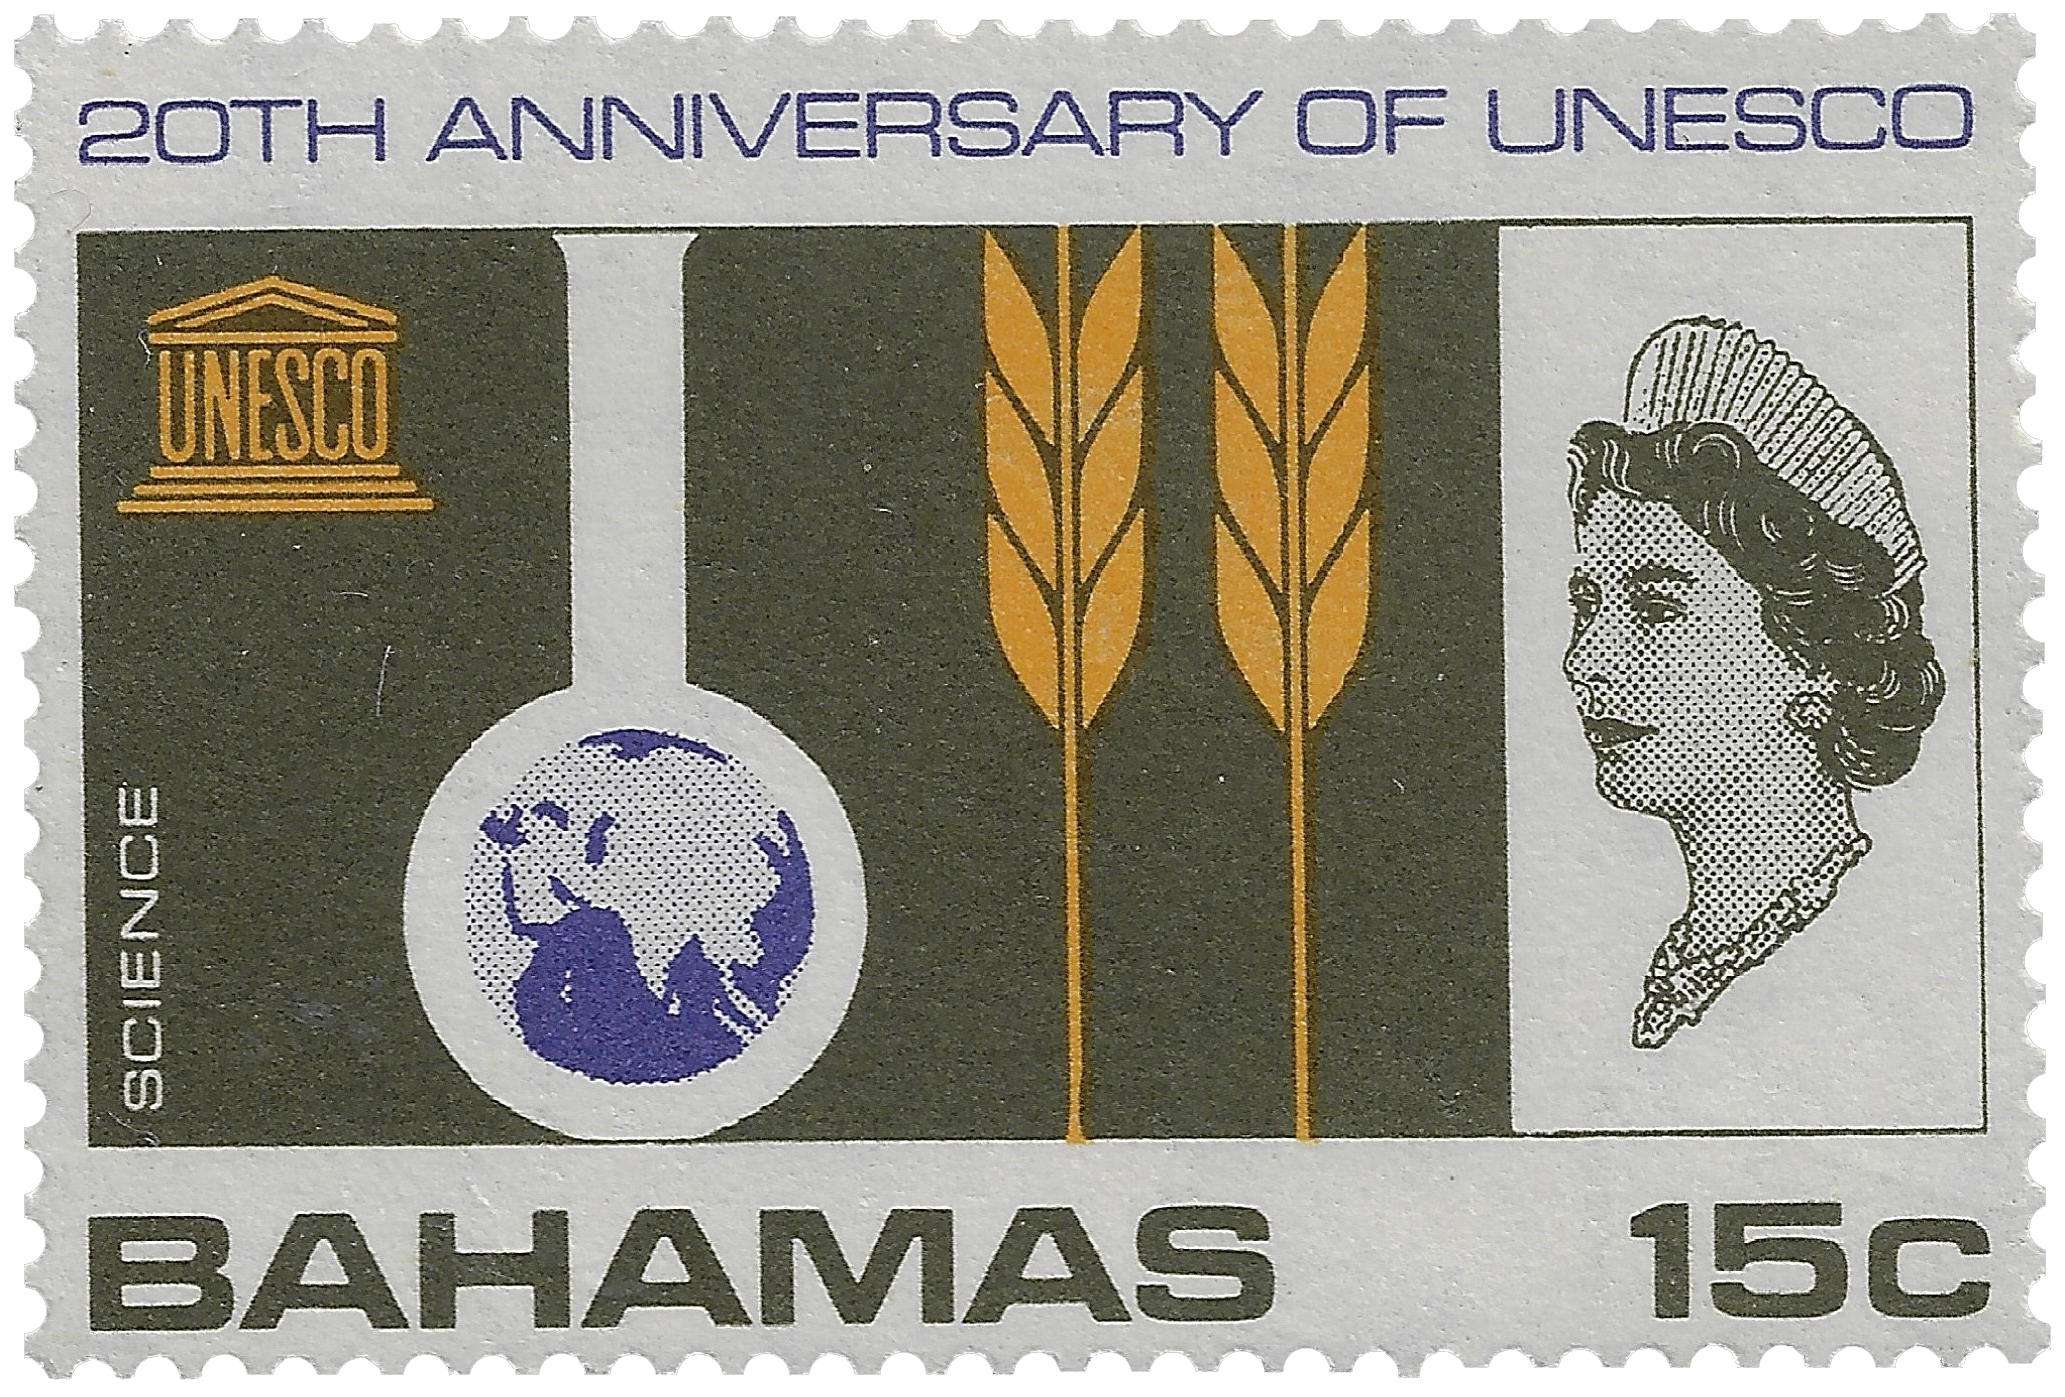 15c 1966, 20th Anniversary of UNESCO, Science